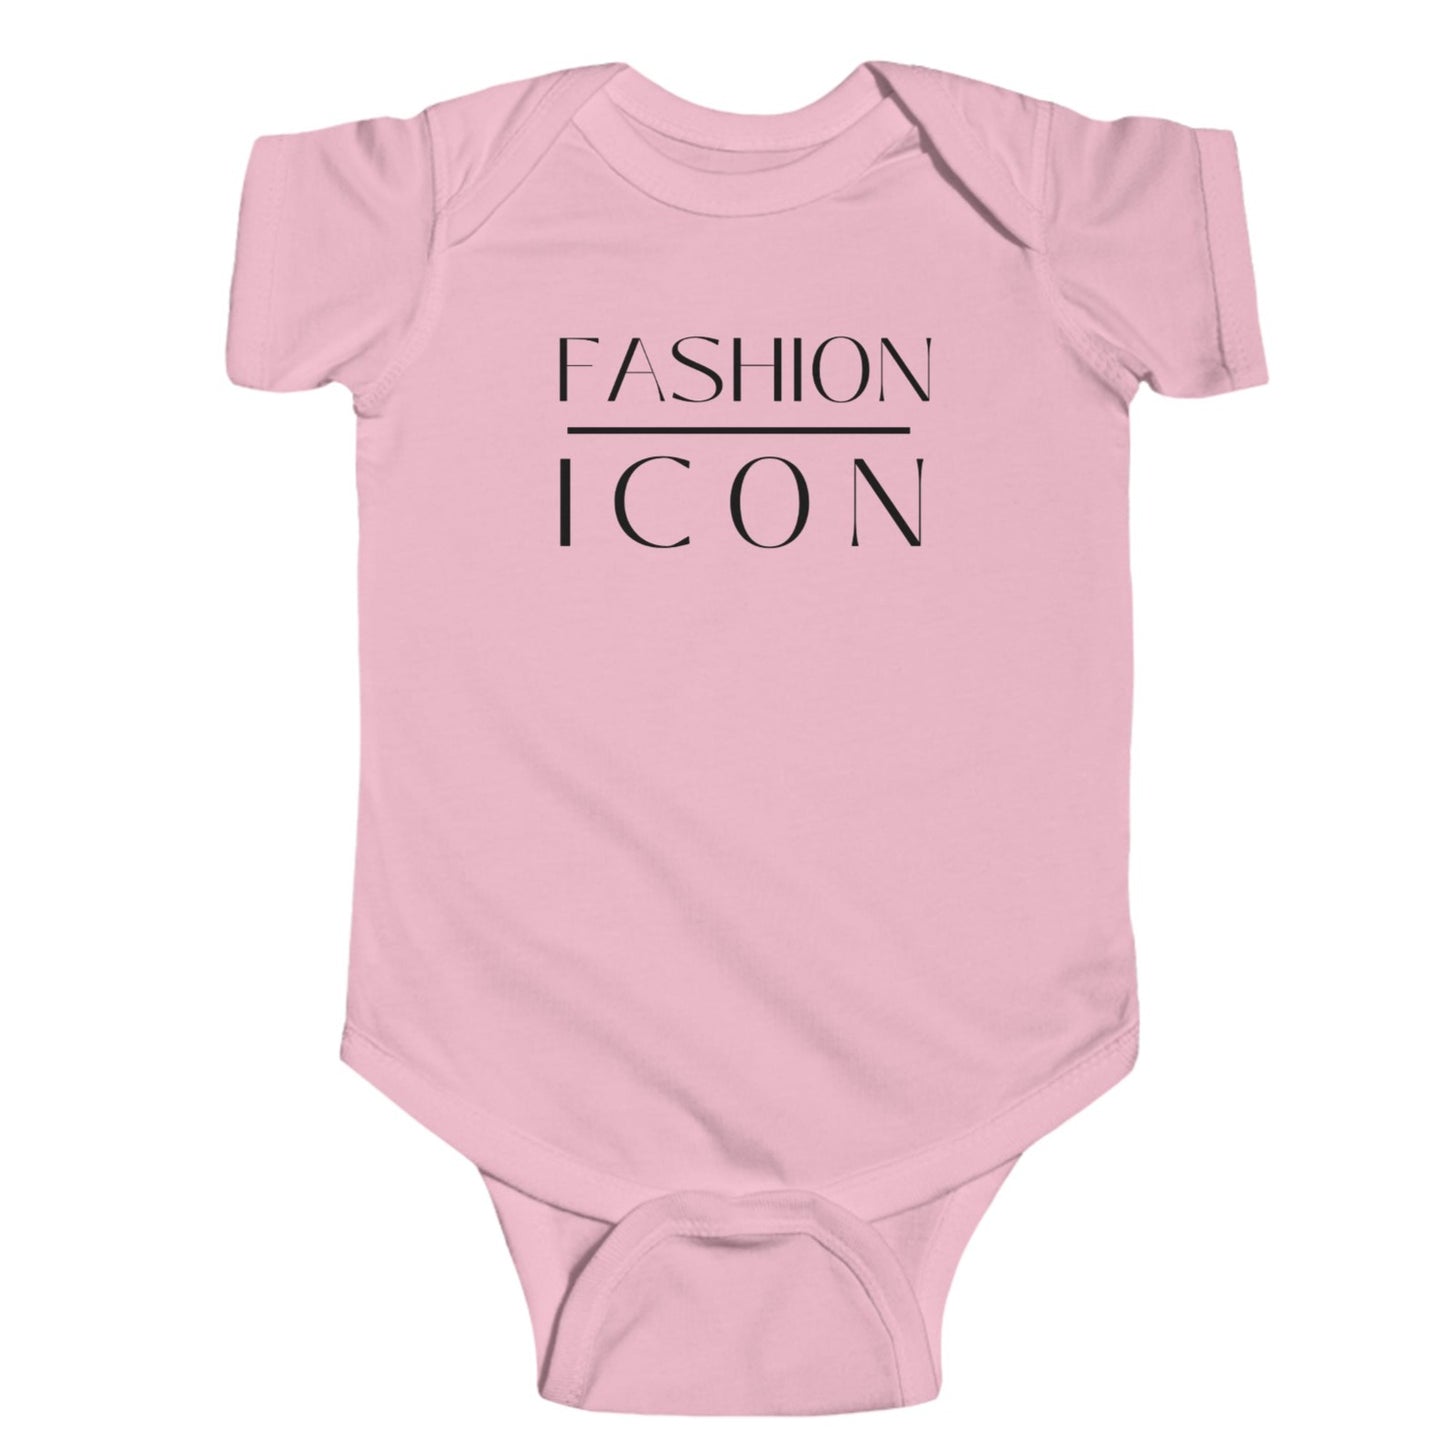 Fashion Icon Infant Bodysuit